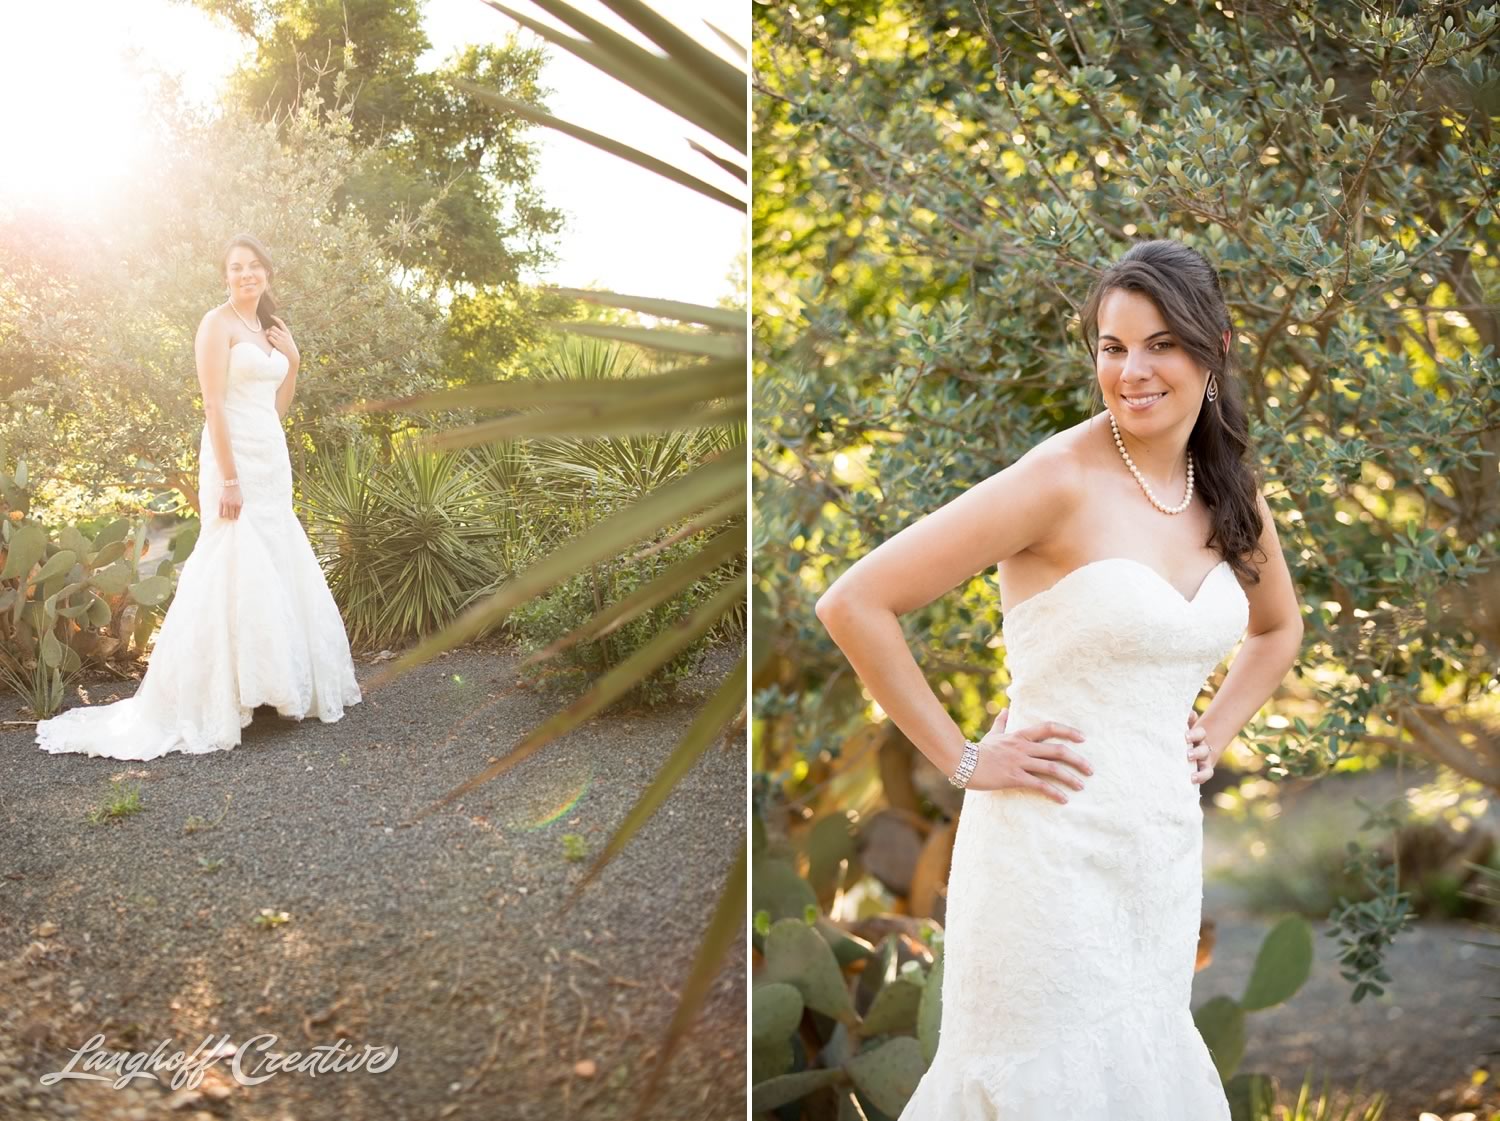 BridalSession-Bridals-RaleighBride-NCbride-JCRaulstonArboretum-RaleighWedding-WeddingPhotographer-LanghoffCreative-Amy2015-Bride-11-photo.jpg